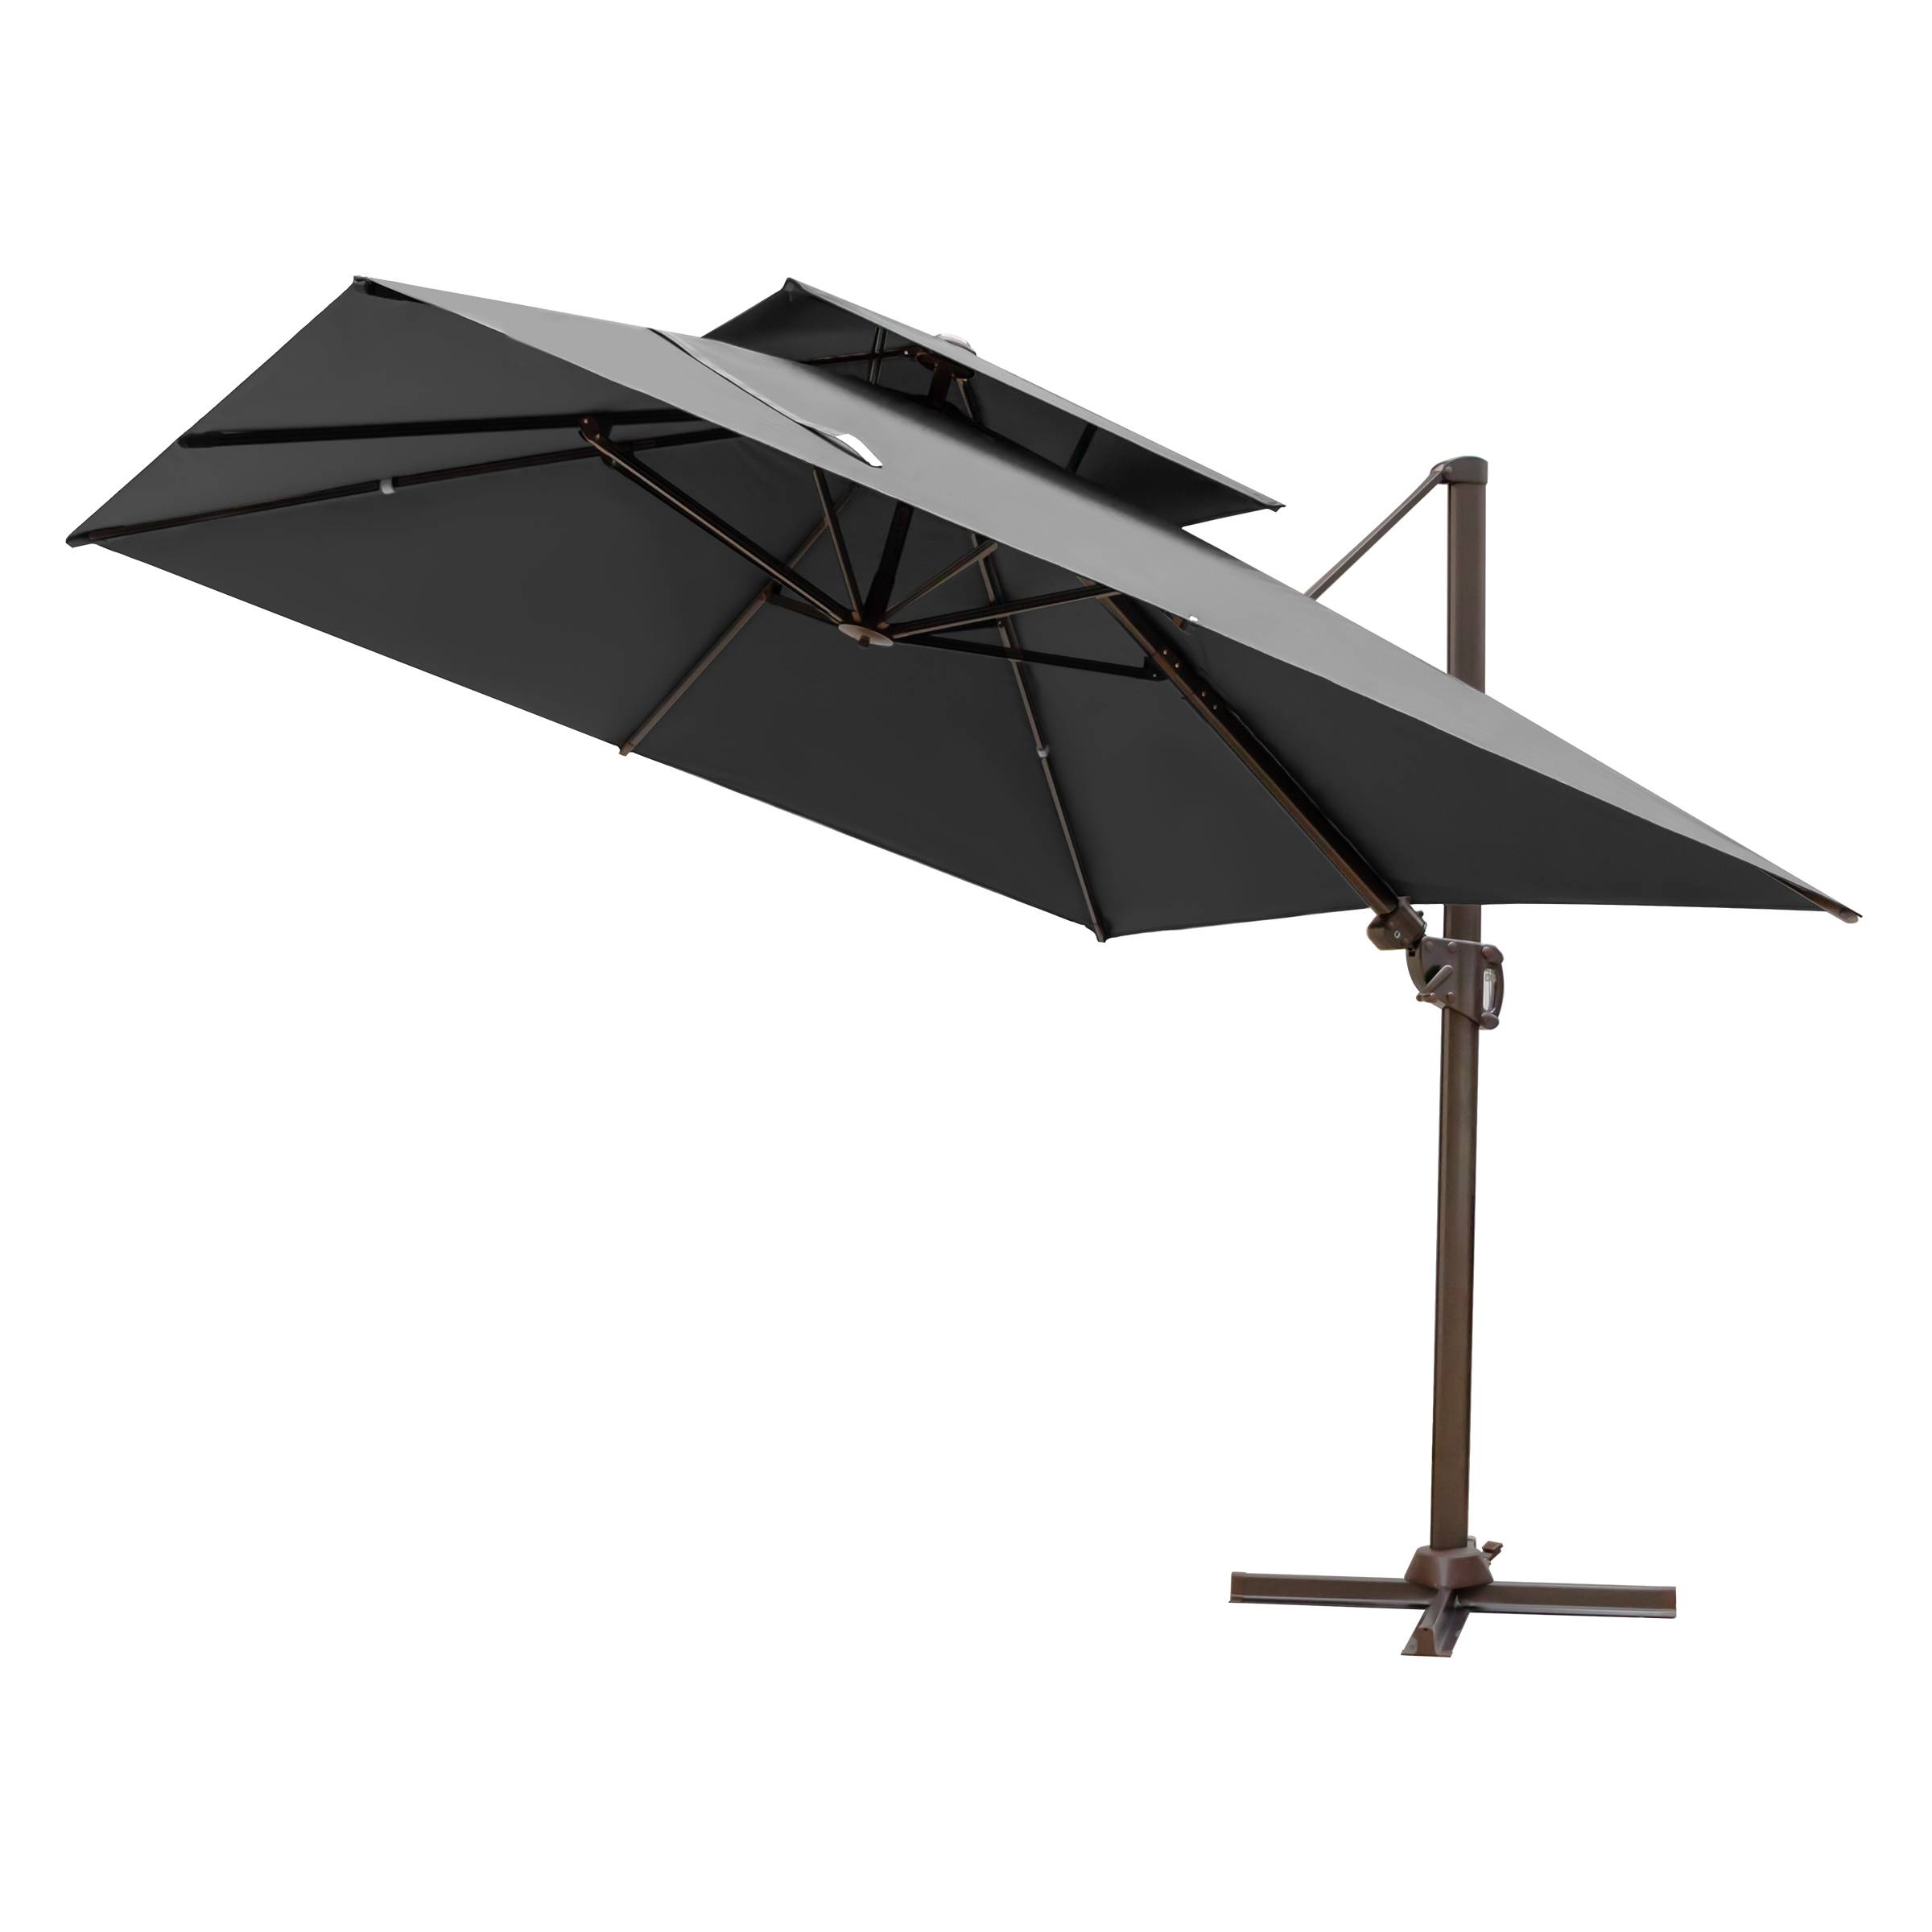 Genuine Silver Cross Parasol Sun Umbrella Top Part Only Black/brown 